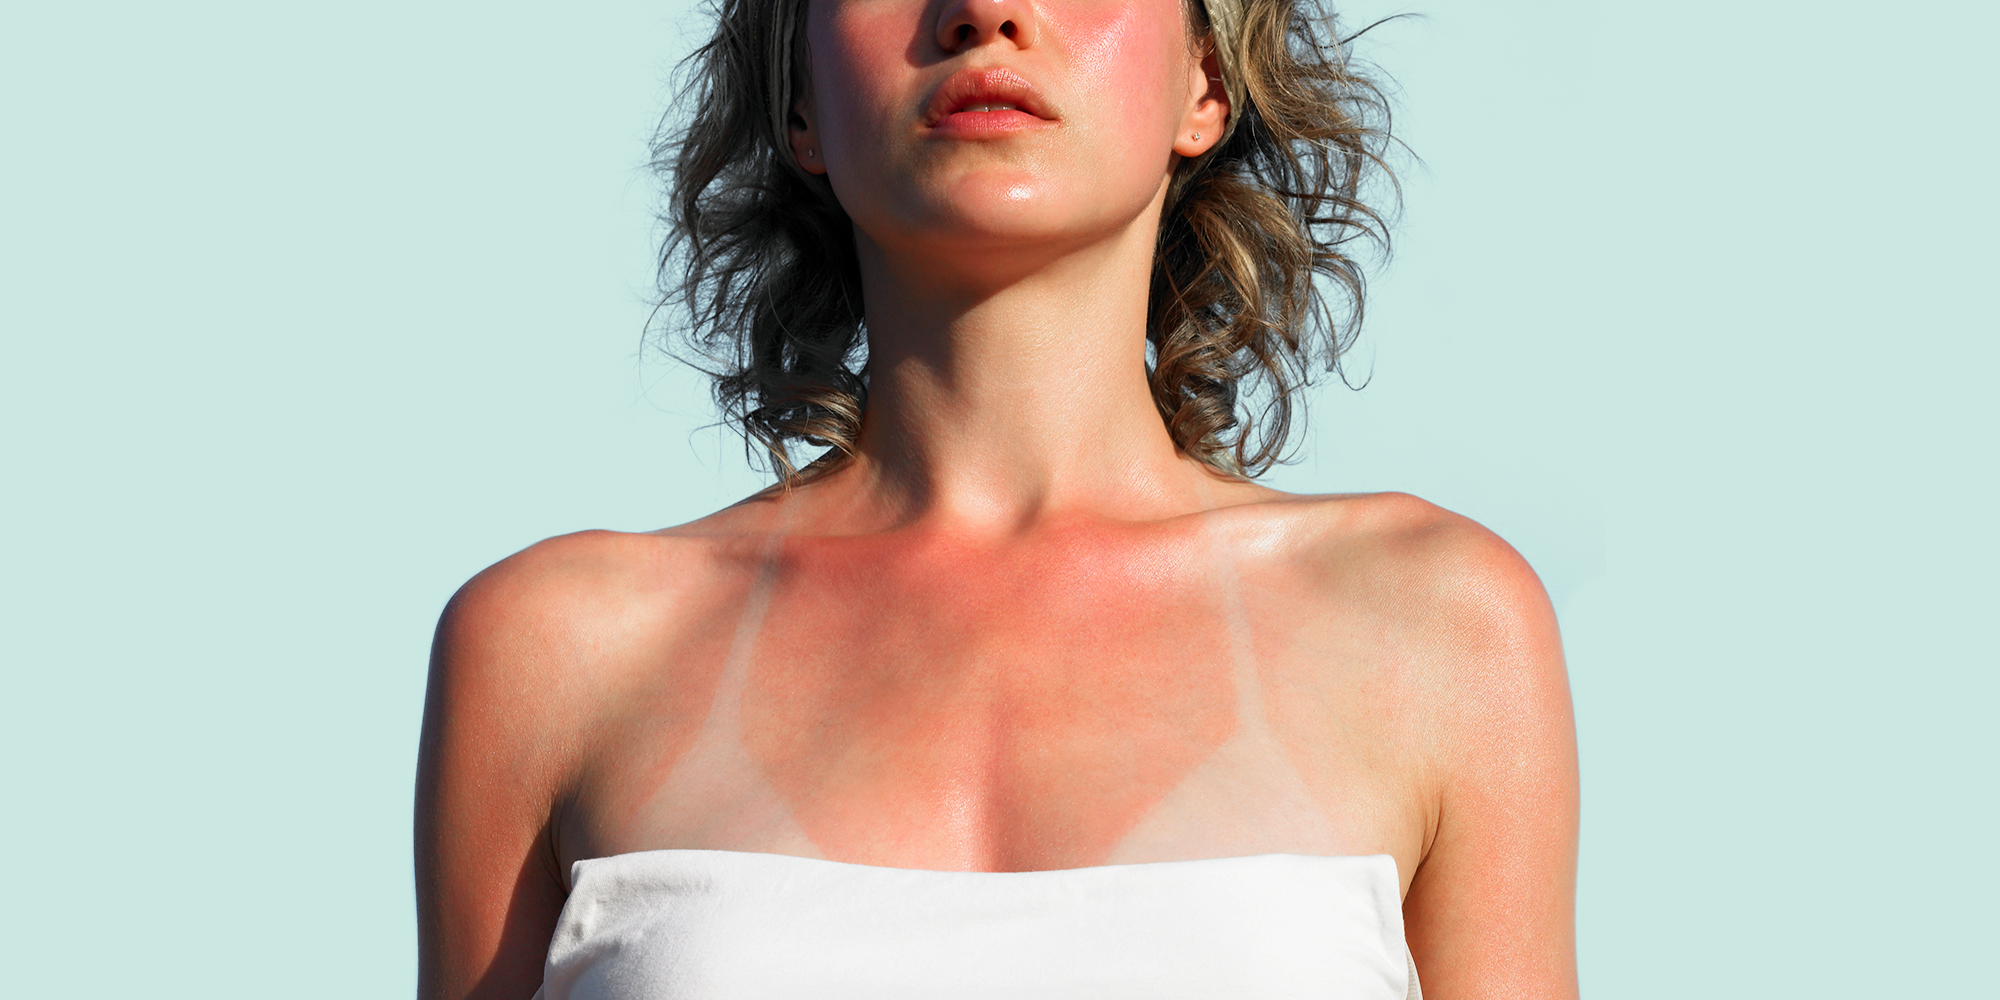 How to Get Rid of Sunburn Fast - 17 Sunburn Remedies